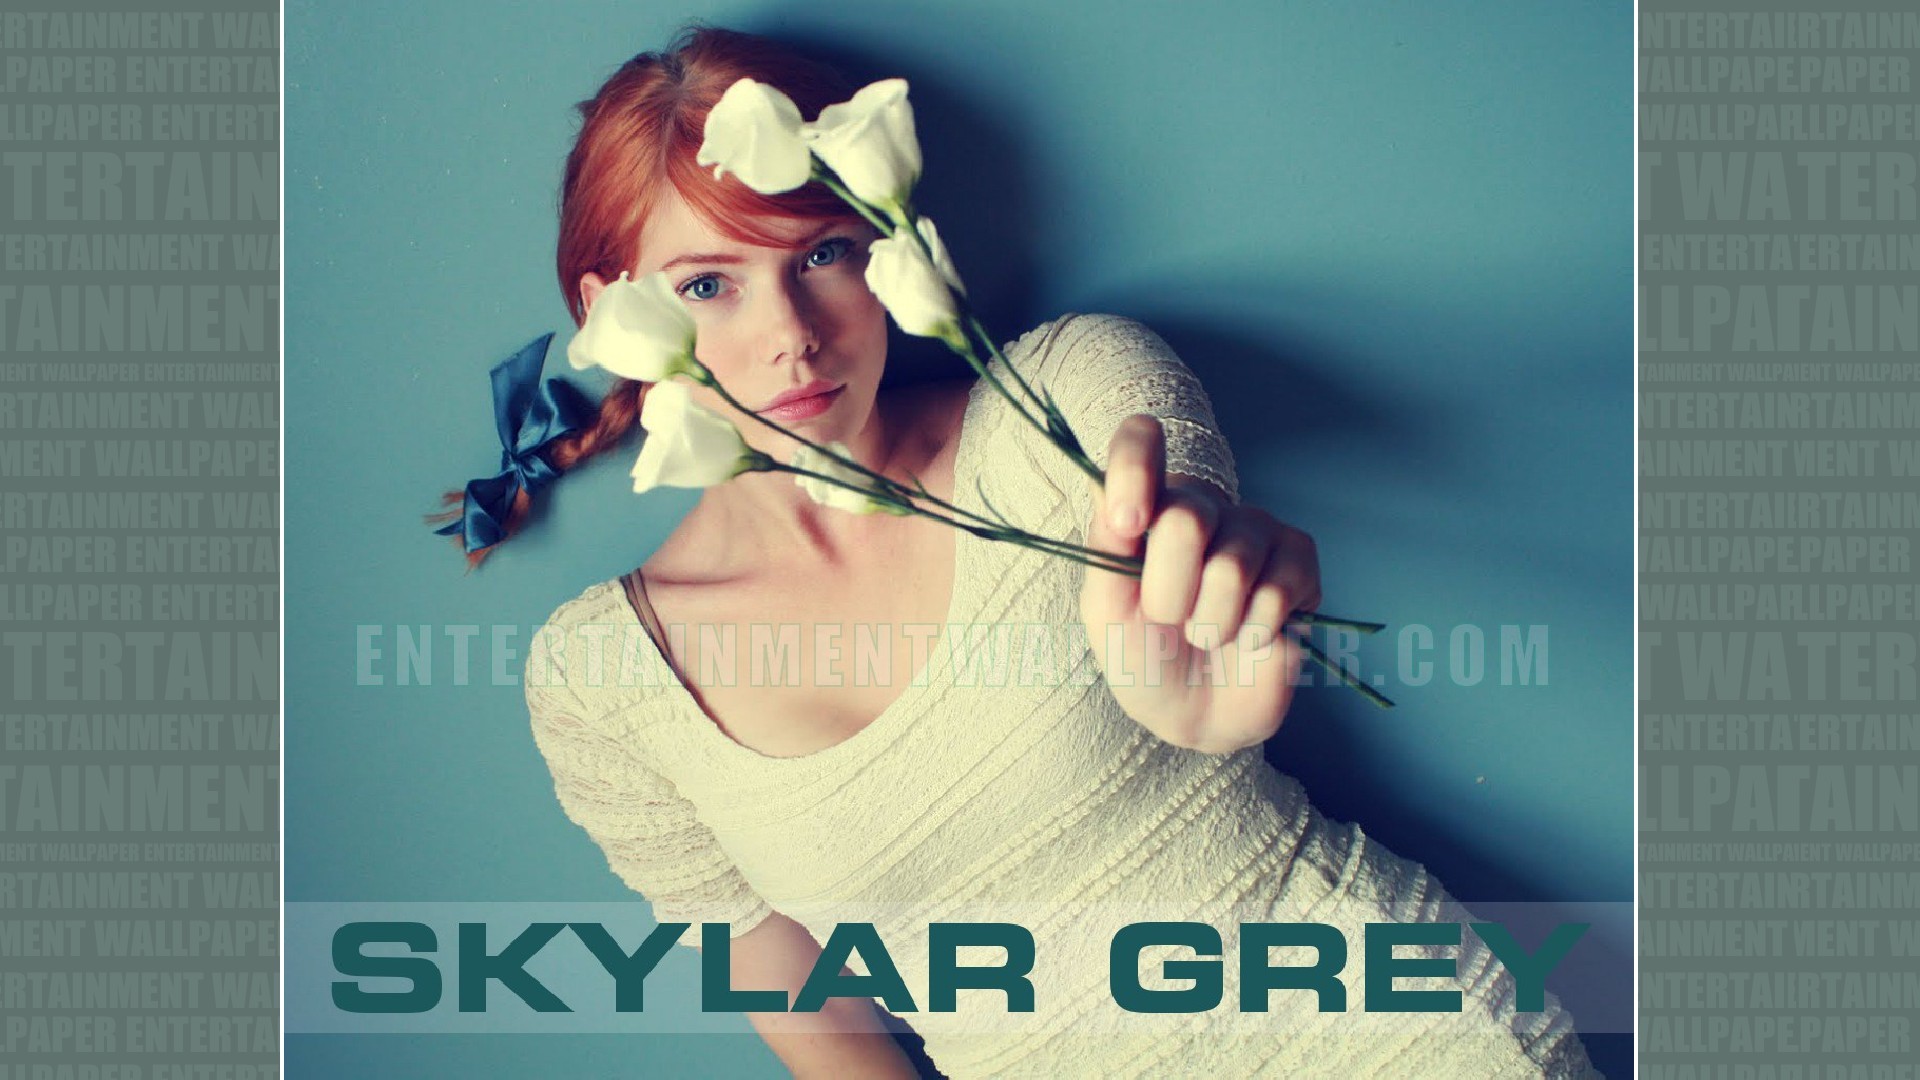 1920x1080 Skylar Grey Wallpaper - Original size, download now.